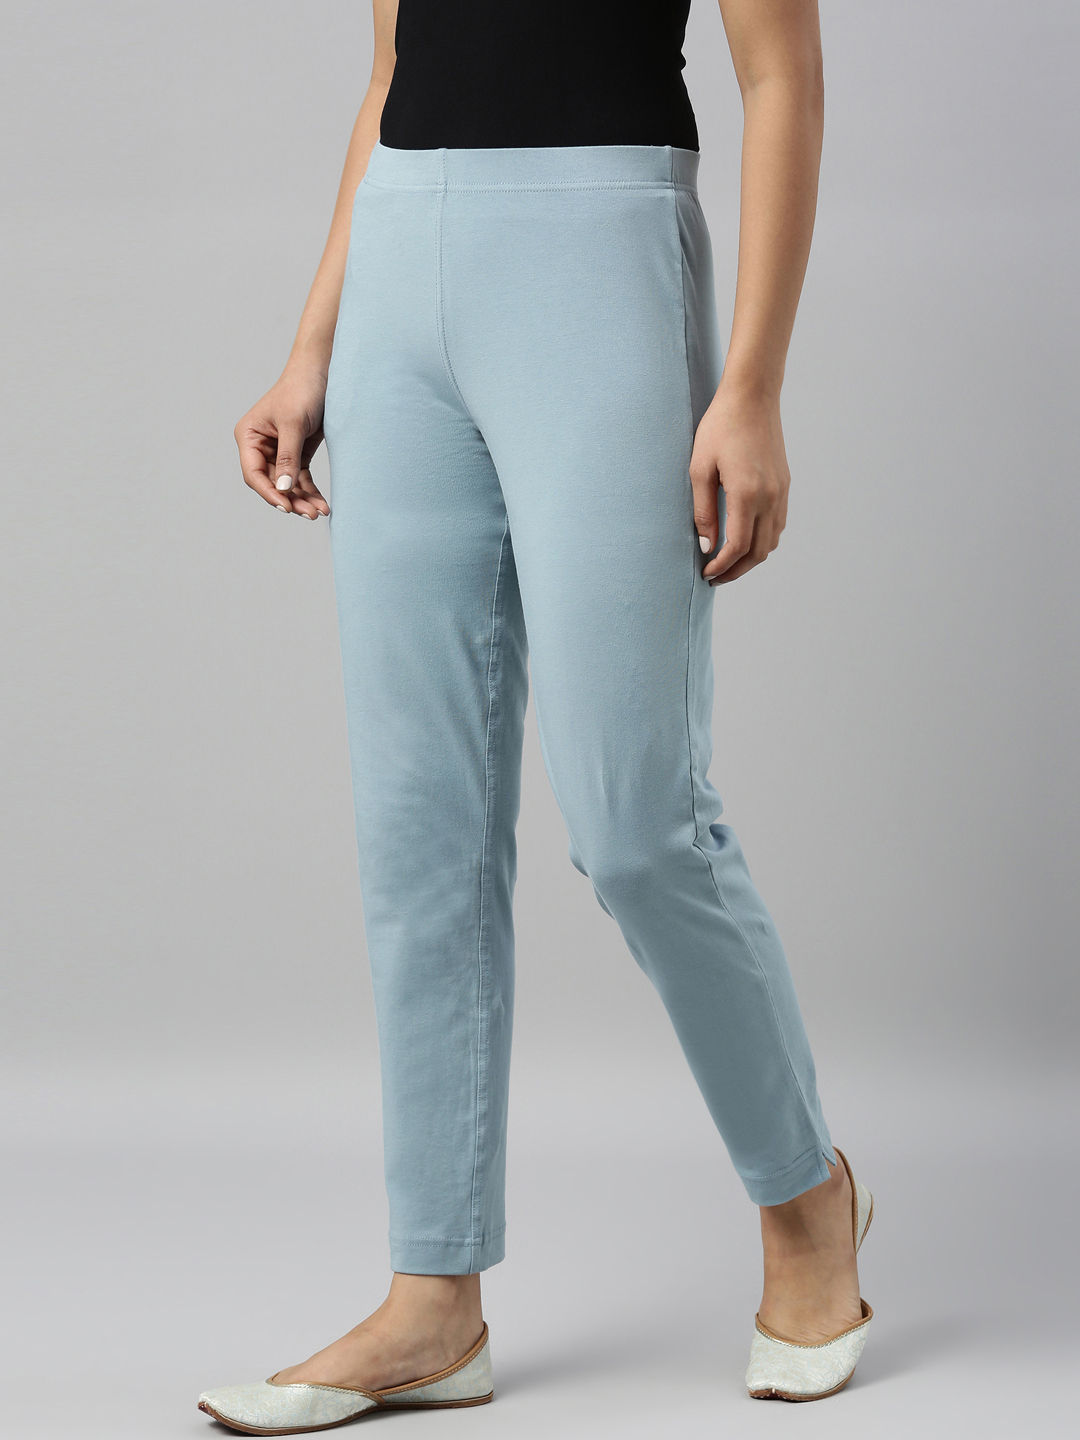 Cigarette trousers - Dusty blue - Ladies | H&M IN